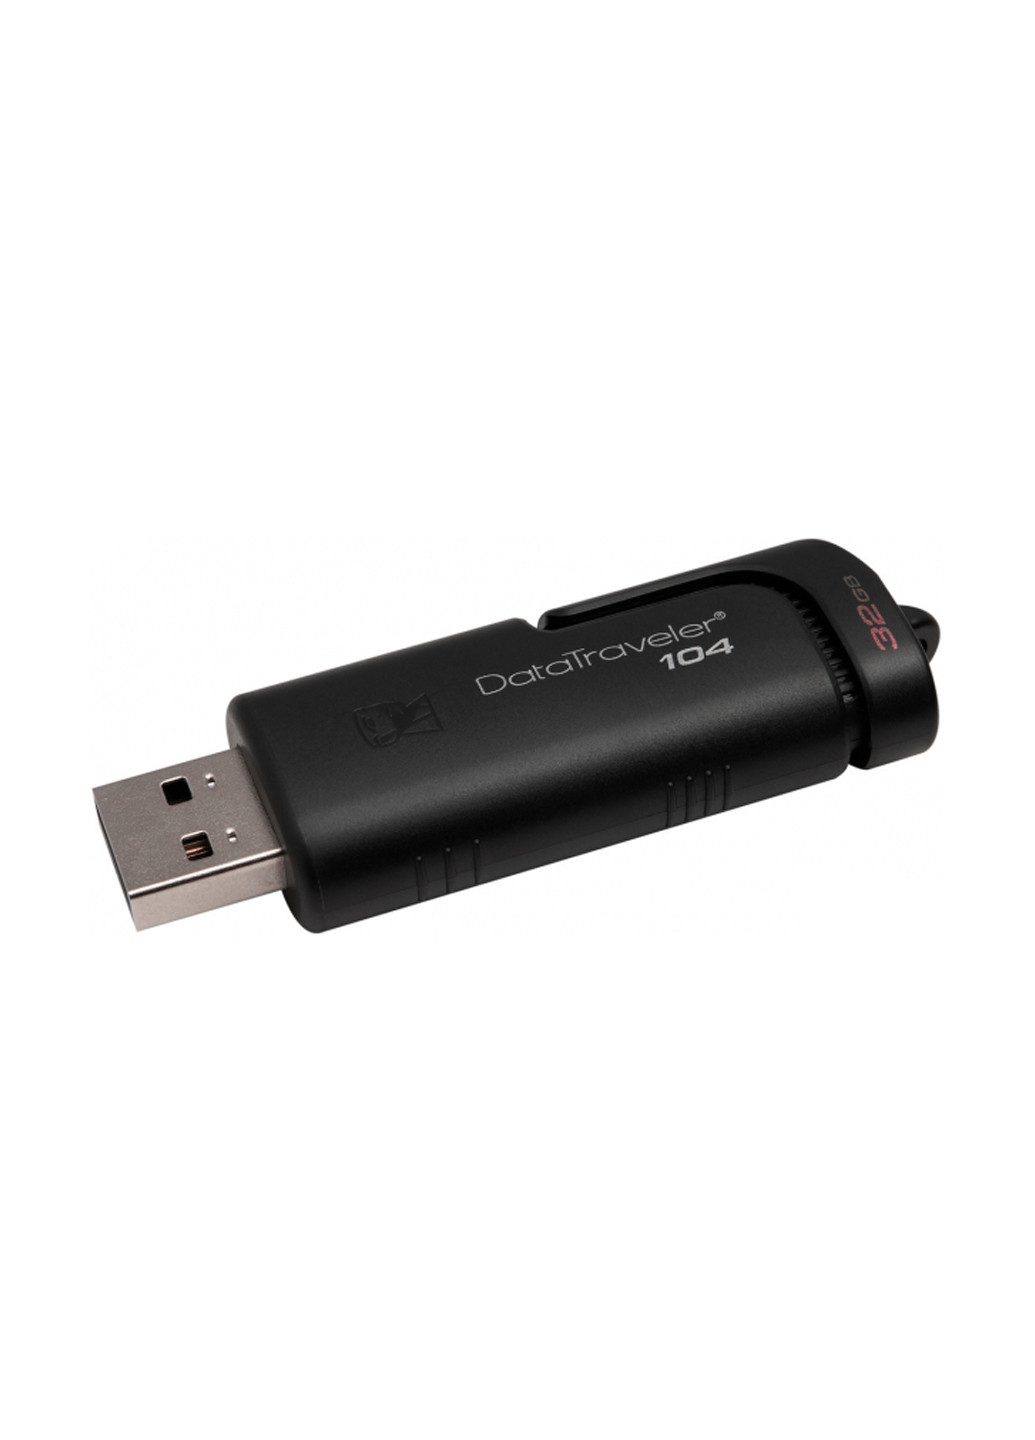 Флеш пам'ять USB DataTraveler 104 32GB (DT104 / 32GB) Kingston флеш память usb kingston datatraveler 104 32gb (dt104/32gb) (136742716)